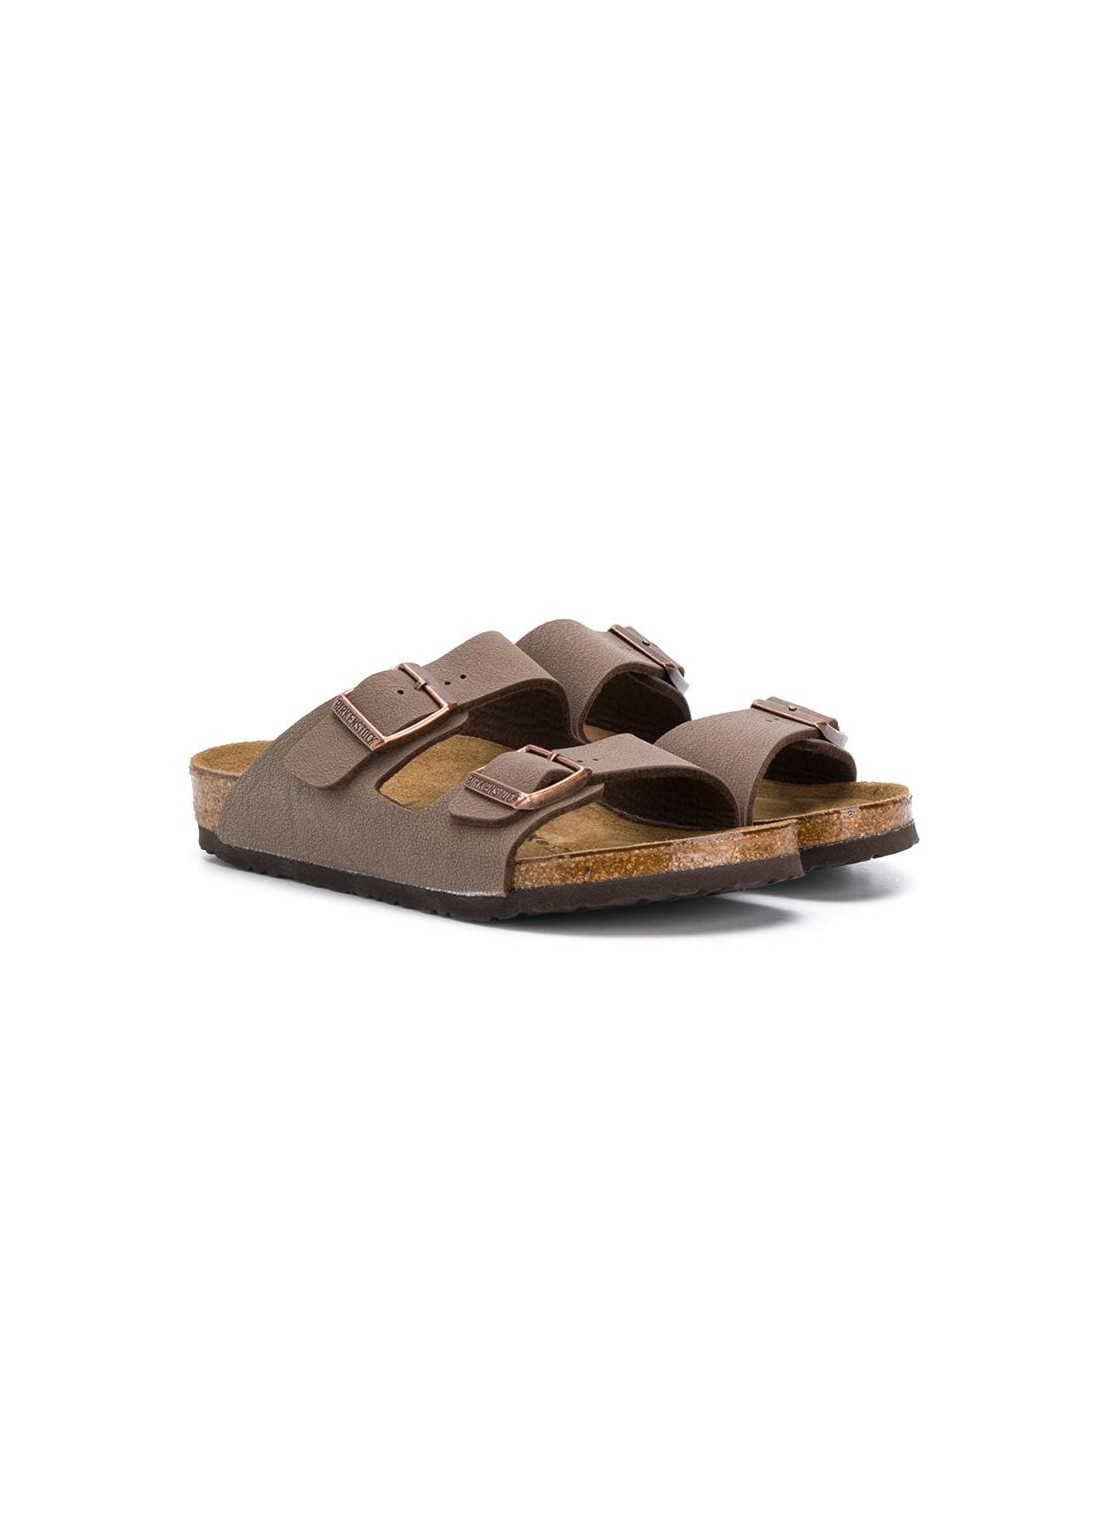 Sandalia birkenstock sandal man arizona kids bfbc 552893 mocha talla 32
 